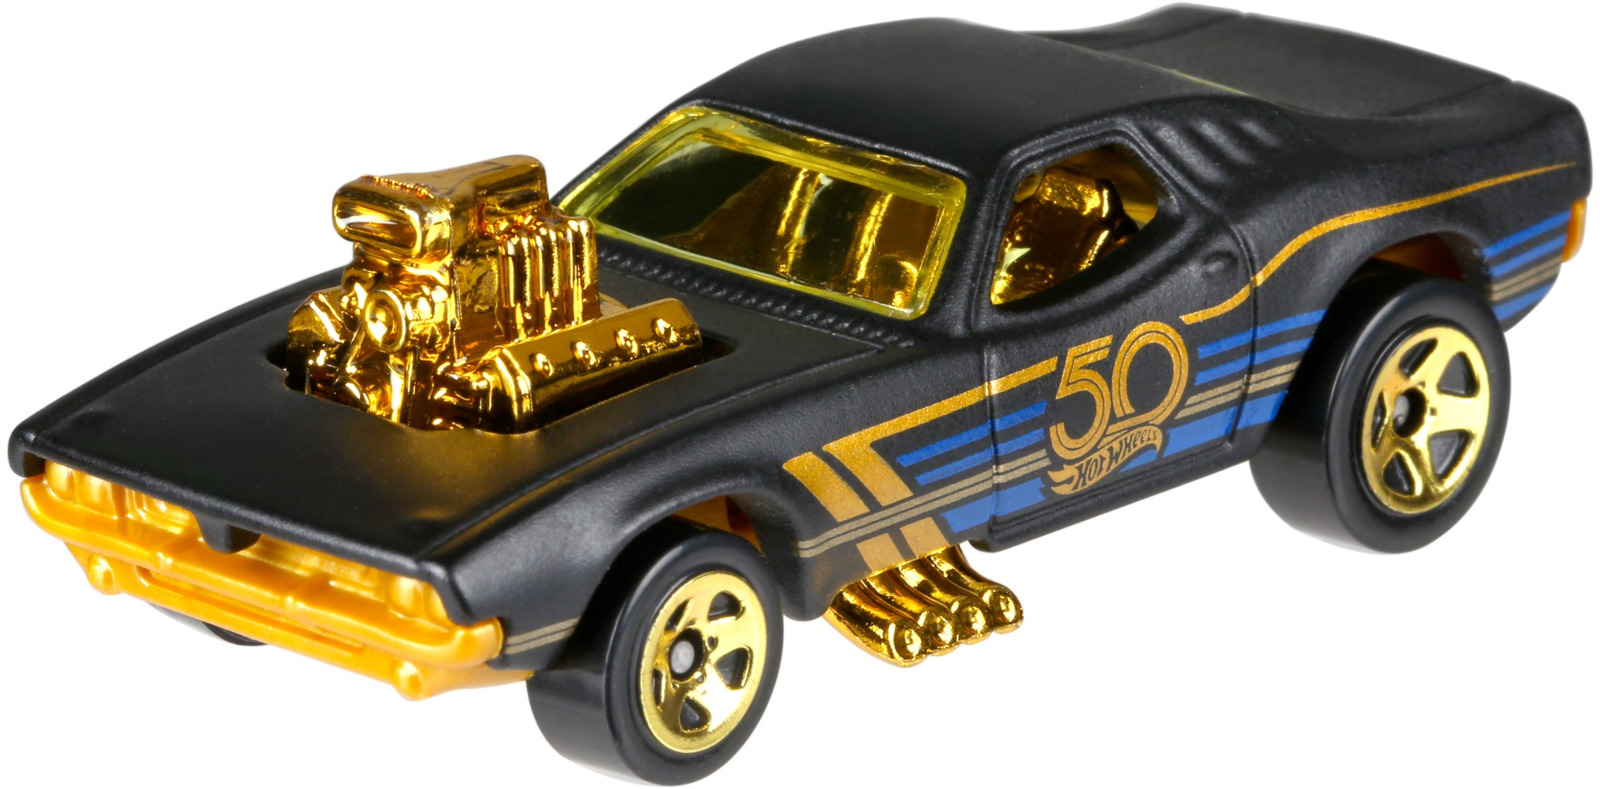 Hot Wheels 50th Anniversary Black Gold